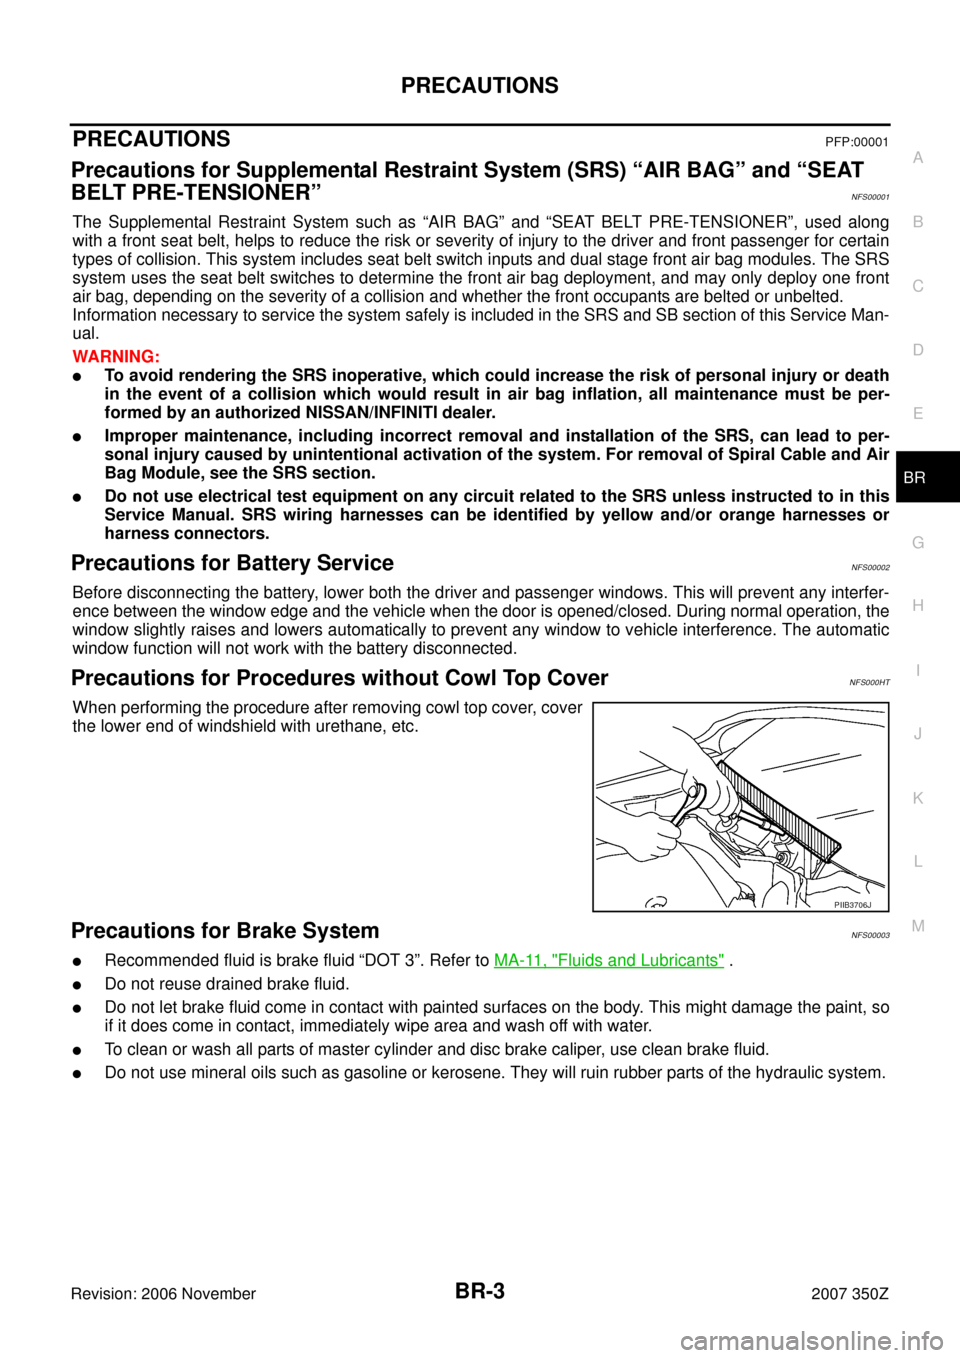 NISSAN 350Z 2007 Z33 Brake System Workshop Manual PRECAUTIONS
BR-3
C
D
E
G
H
I
J
K
L
MA
B
BR
Revision: 2006 November2007 350Z
PRECAUTIONSPFP:00001
Precautions for Supplemental Restraint System (SRS) “AIR BAG” and “SEAT 
BELT PRE-TENSIONER”
NF